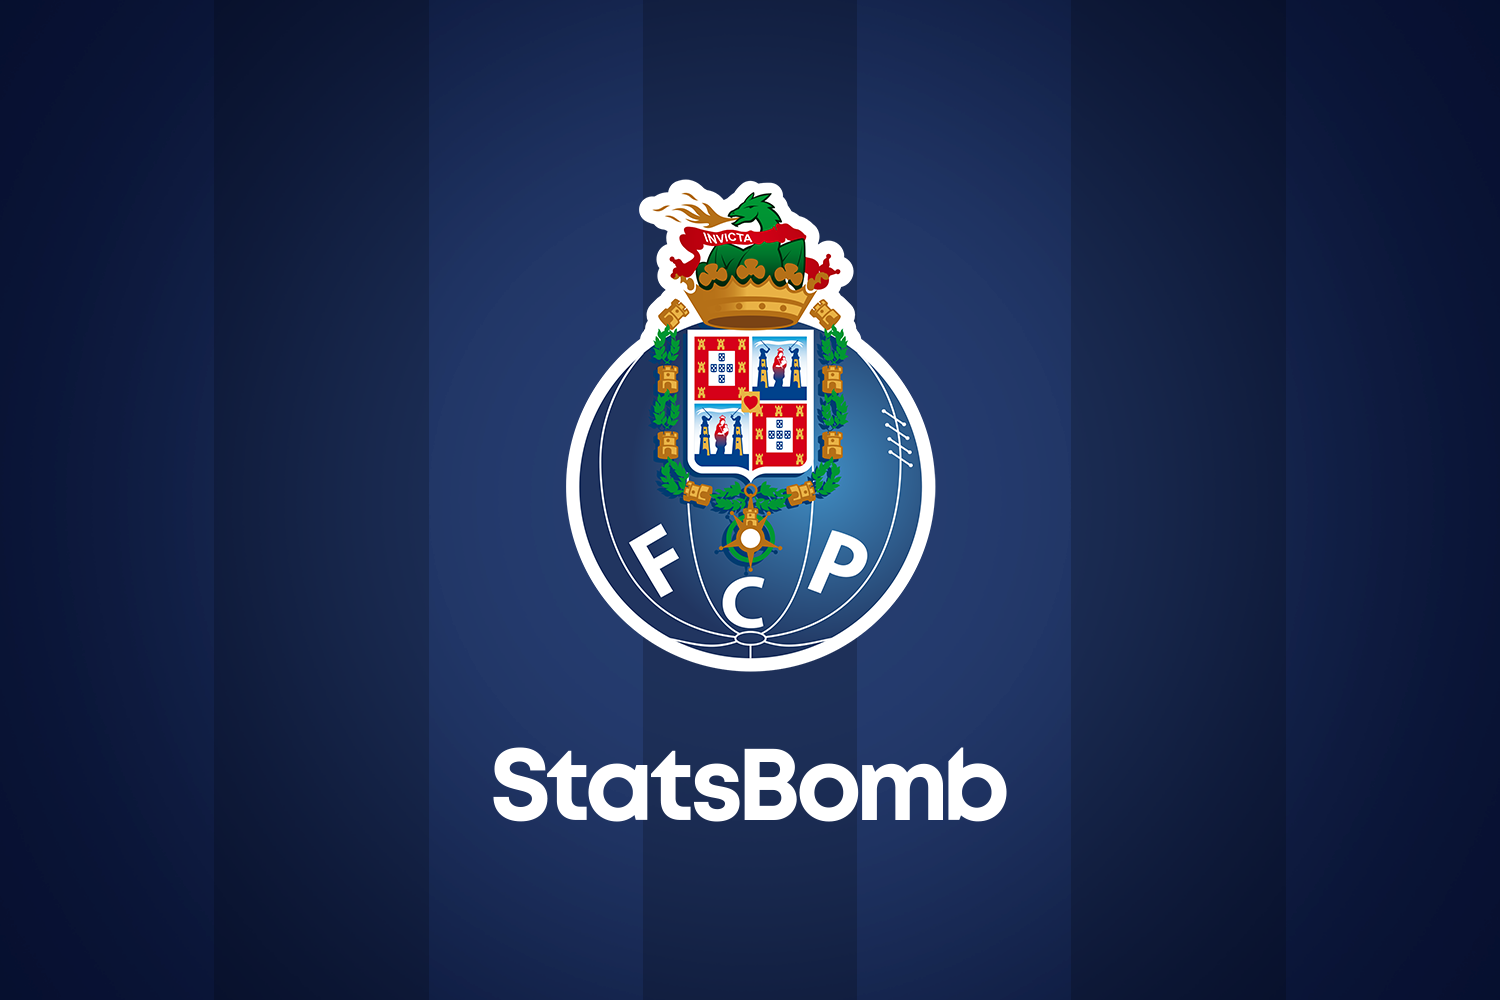 StatsBomb amplía su presencia en Portugal al firmar un acuerdo con Futebol Clube Do Porto